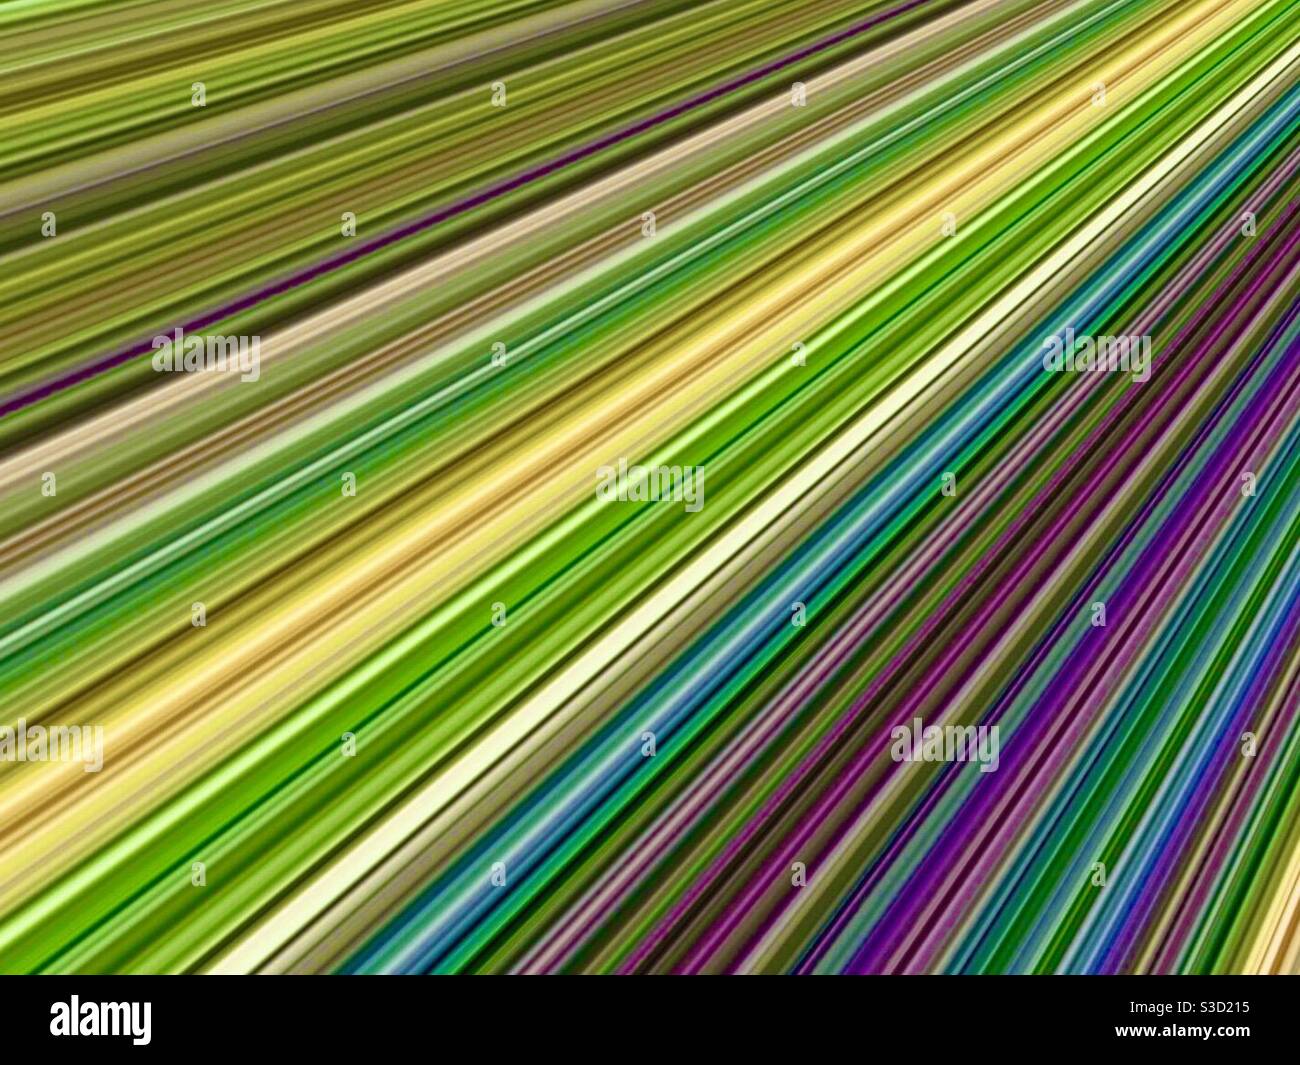 Farbenfrohe abstrakte Fotokunst mit Speed Lines-Effekt Stockfoto